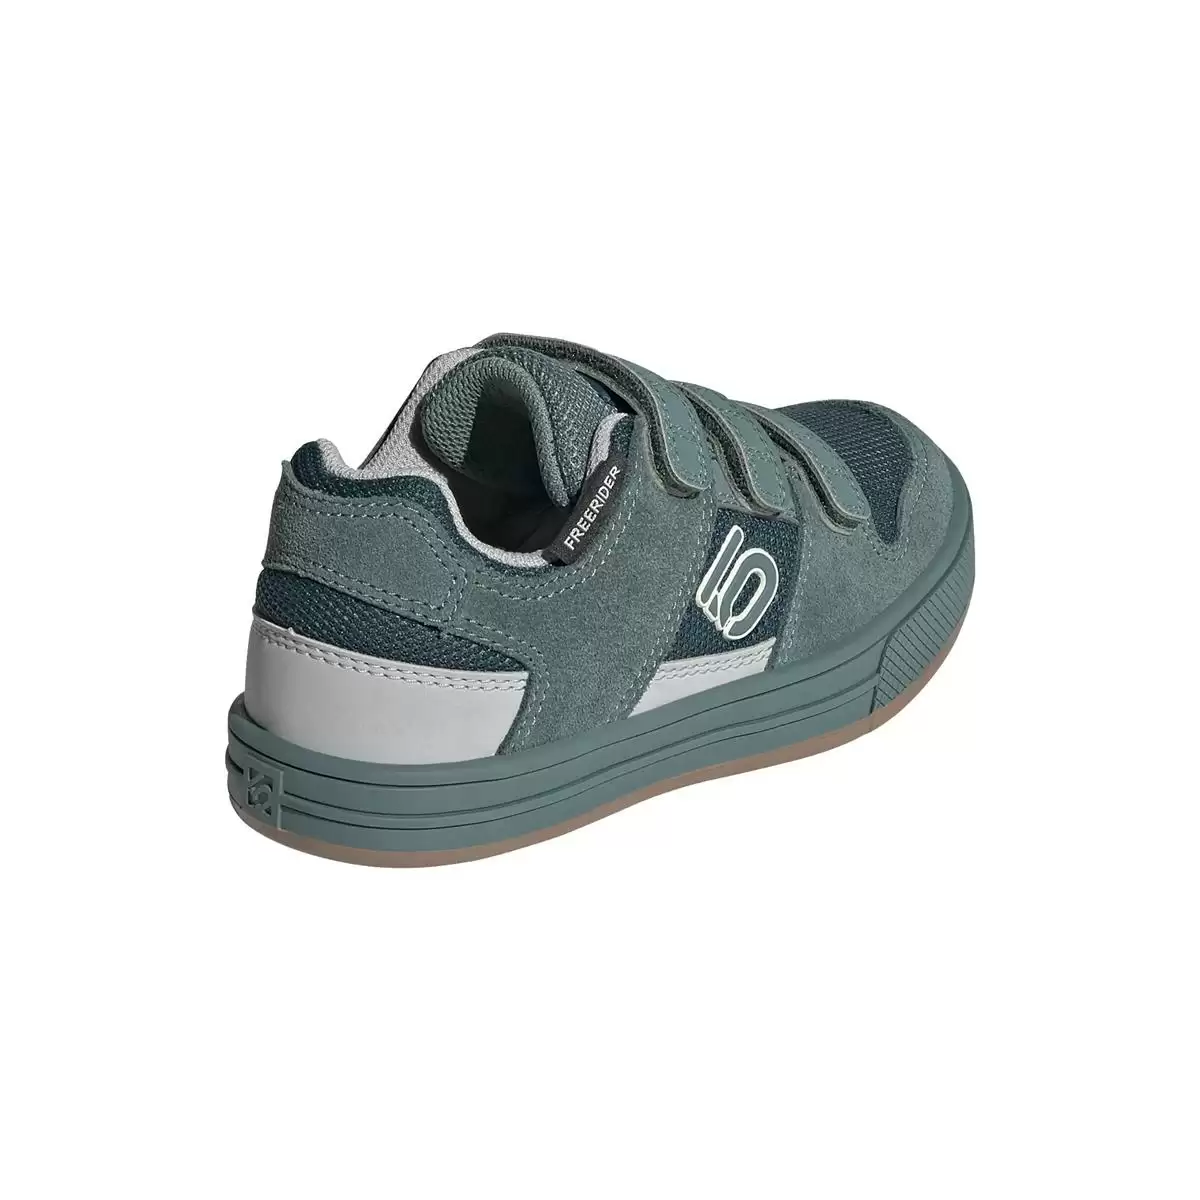 MTB Flat Shoes Freerider Kids VCS Junior Aqua Size 30 #2